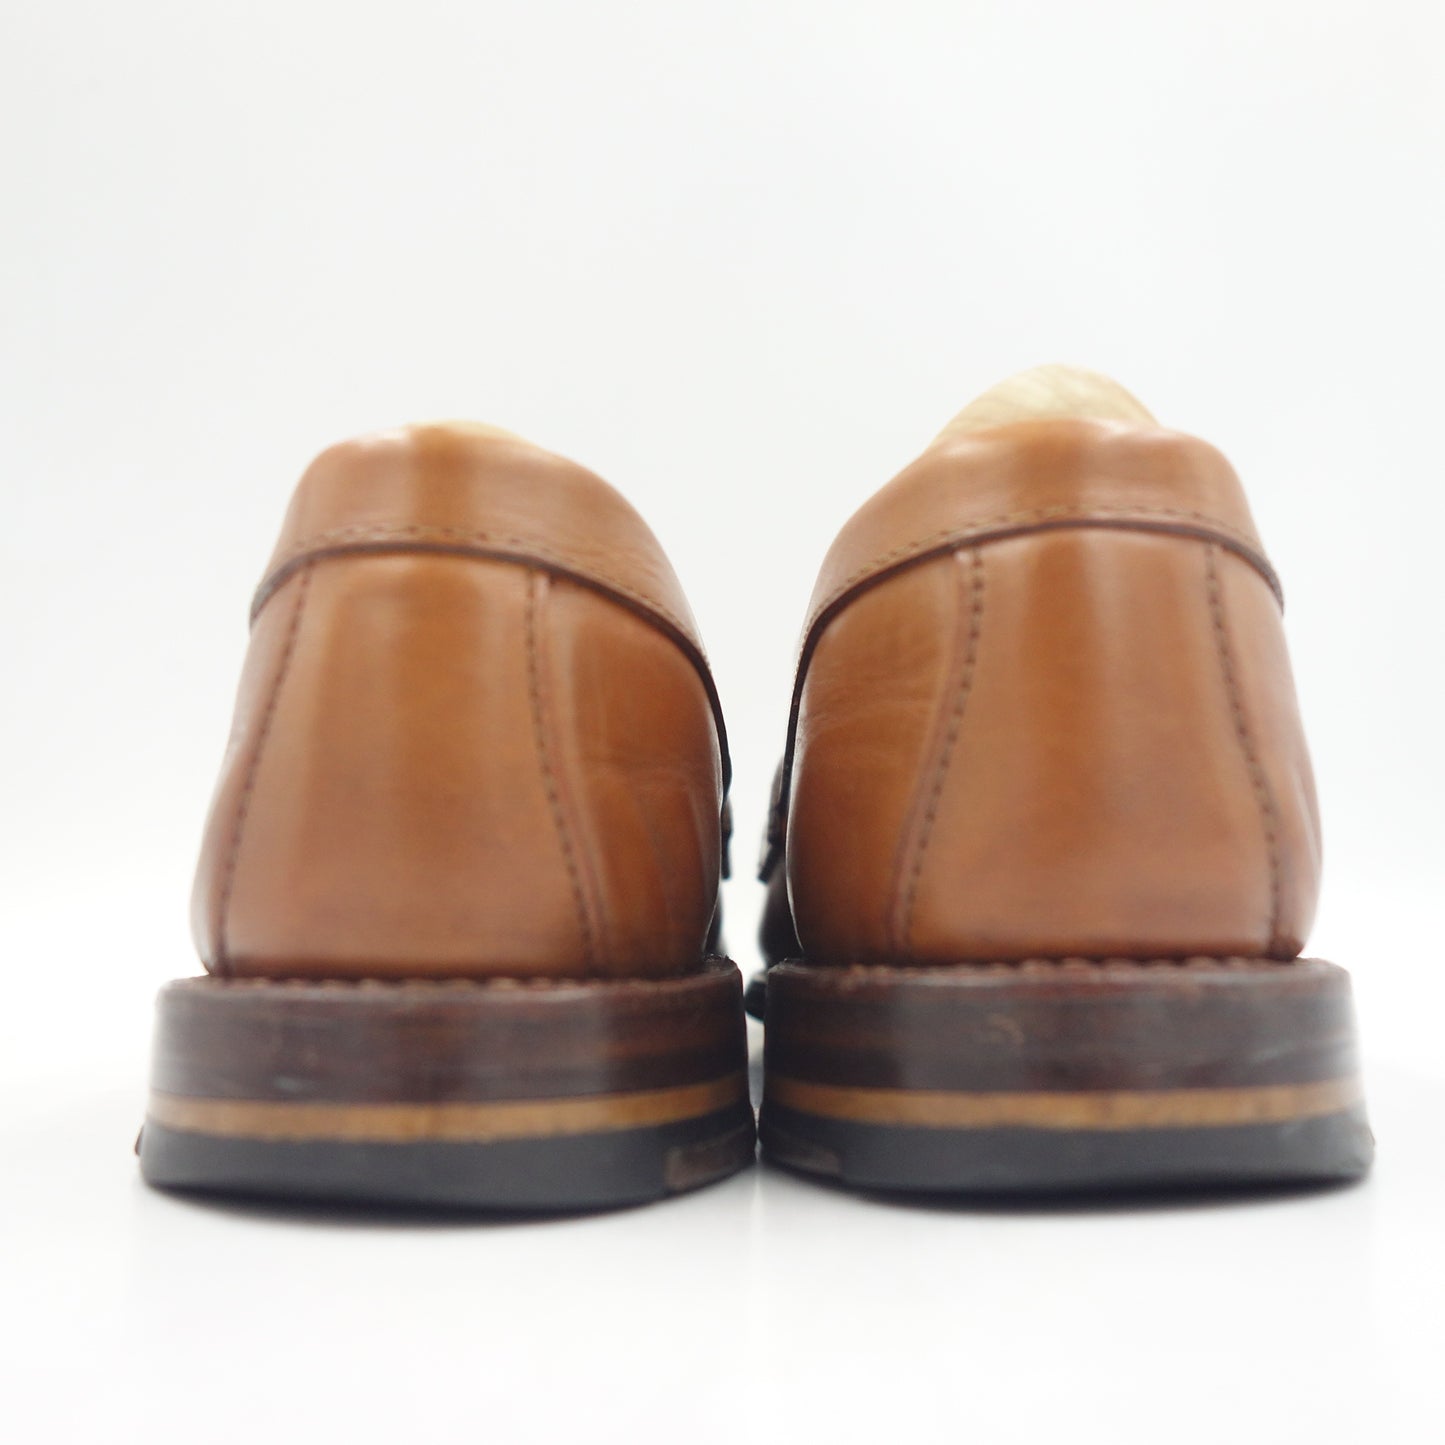 Used ◆ Alden Ships Custom Leather Shoes Coin Loafers 7159UF Calf Men's Brown US8C ALDEN SHIPS [LA] 